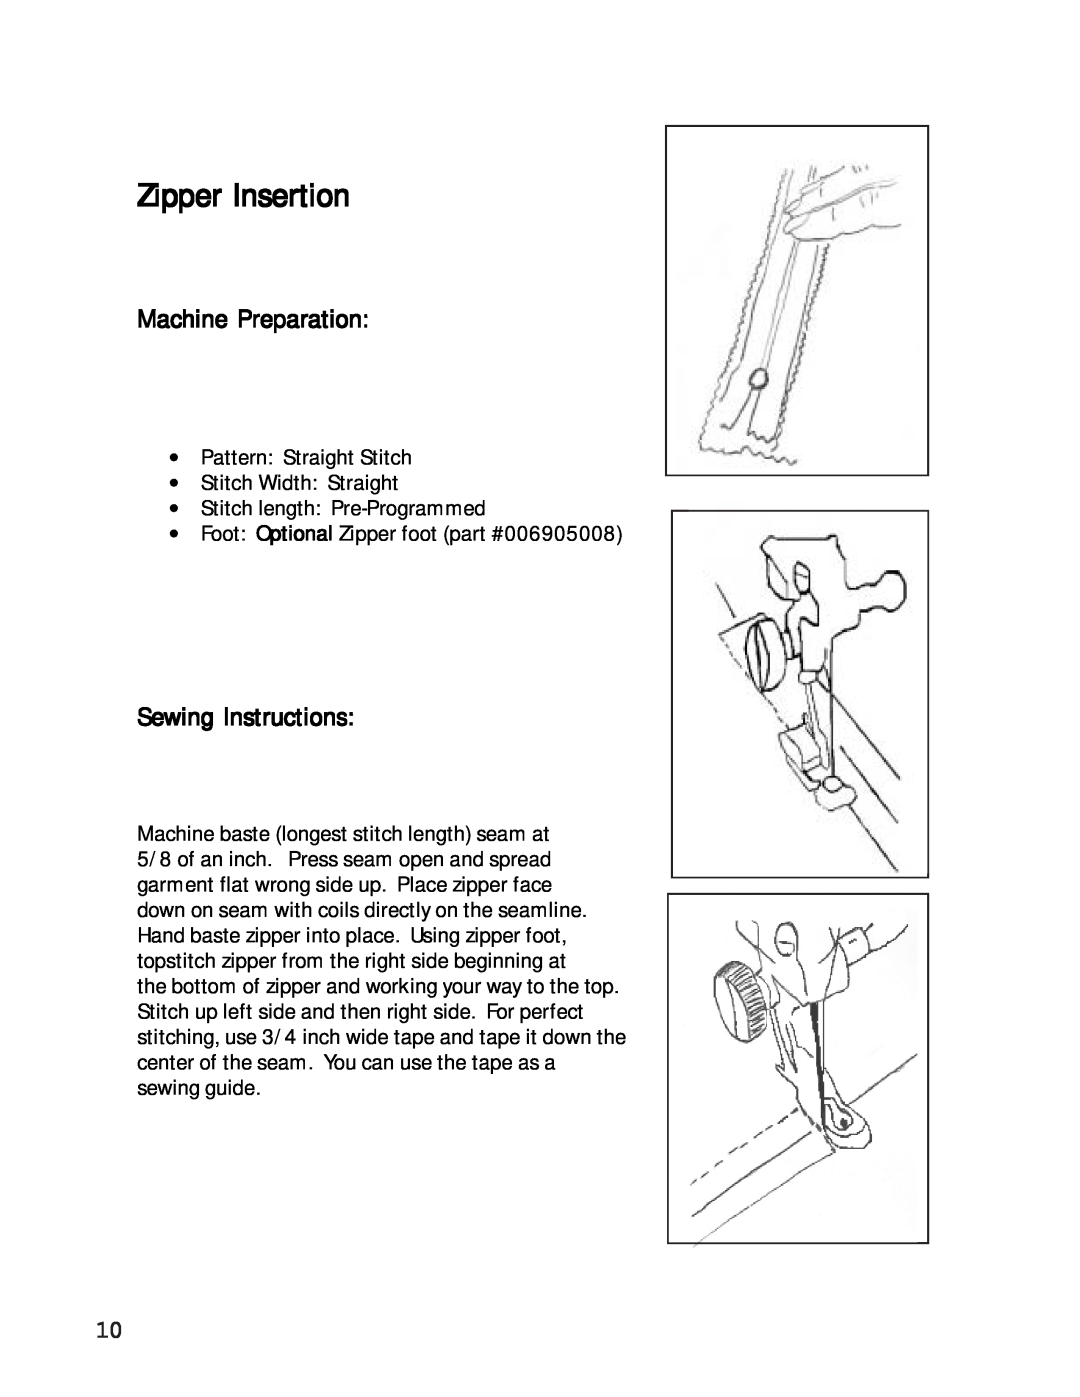 Singer 27 manual Zipper Insertion, Machine Preparation, Sewing Instructions 